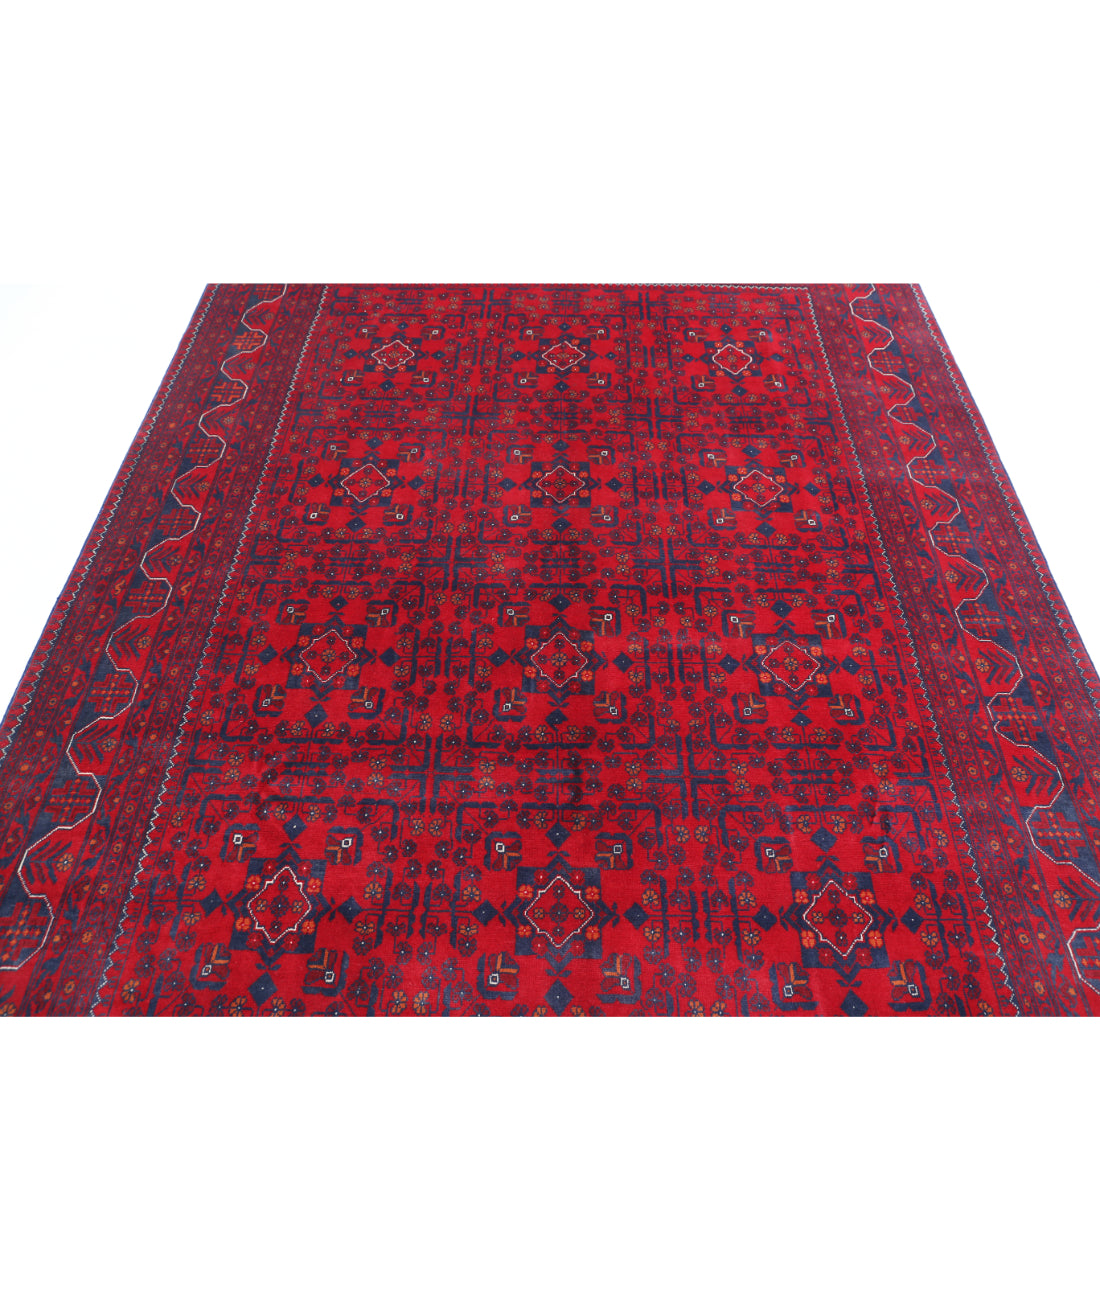 Hand Knotted Afghan Khamyab Wool Rug - 6'8'' x 9'4'' 6'8'' x 9'4'' (200 X 280) / Red / Blue